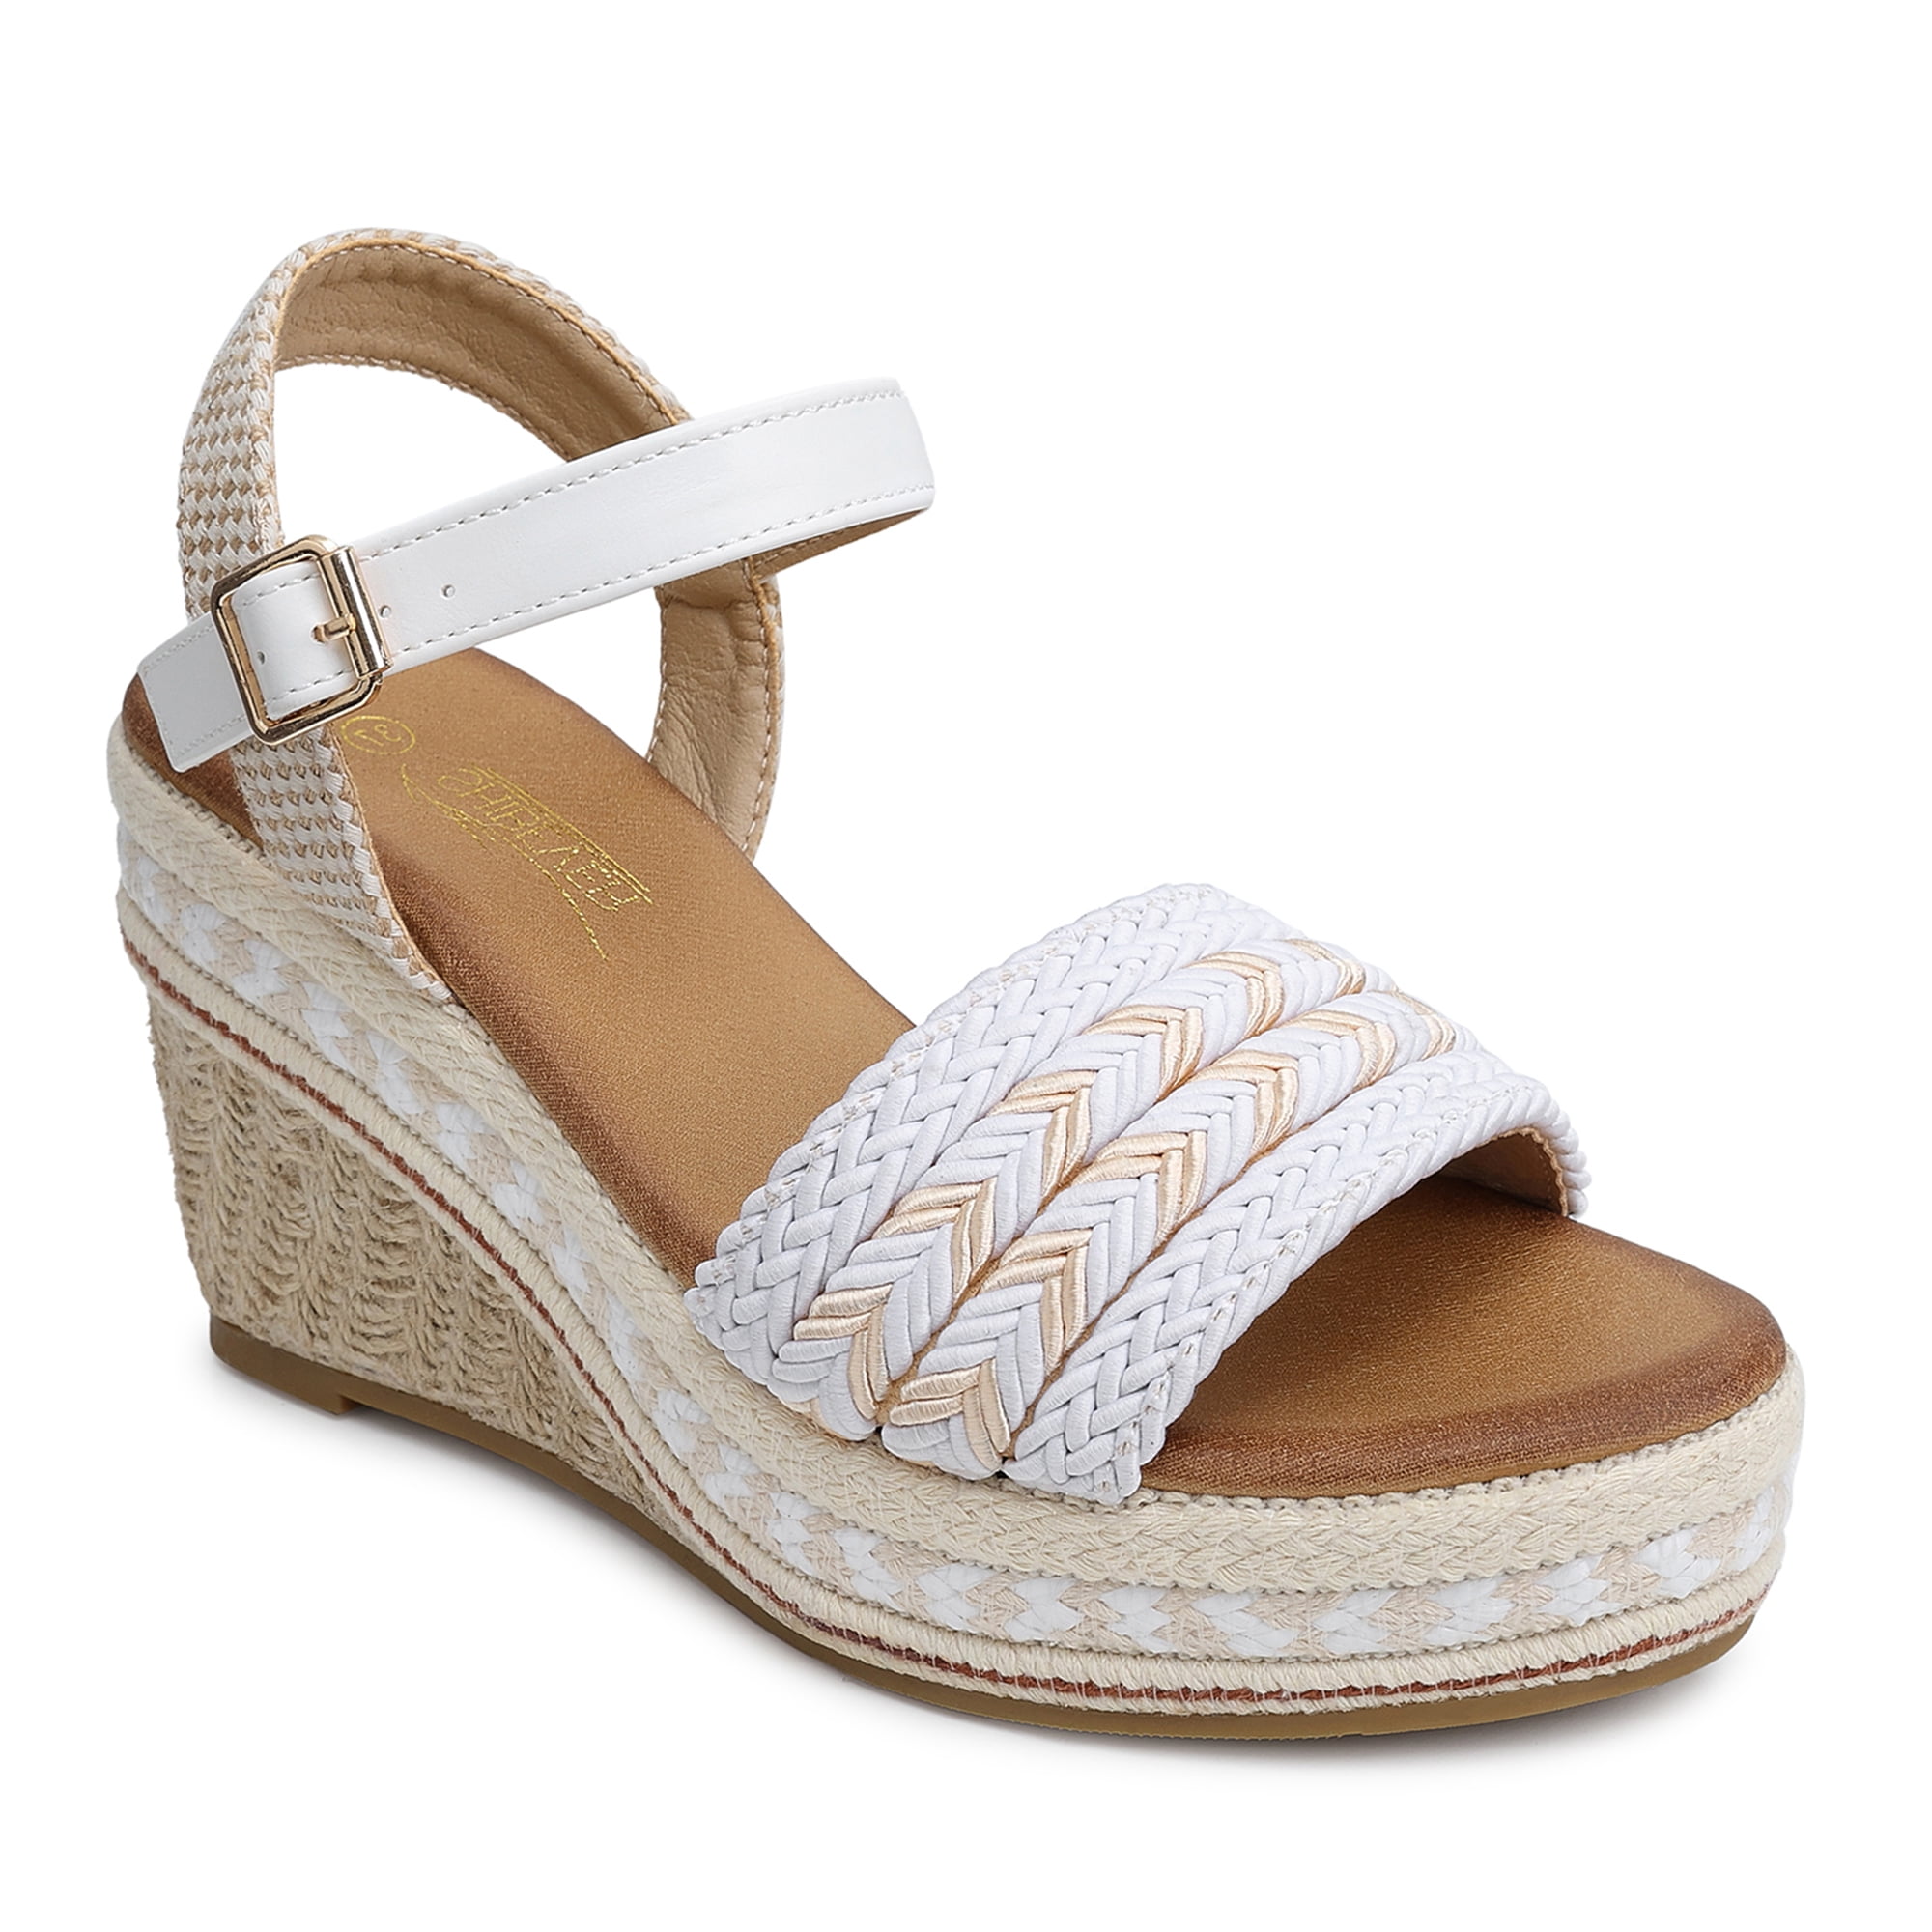 SHIBEVER Summer Wedge Sandals for Women Casual Ankle Strap Open Toe Dressy  Espadrilles Platform Shoes White